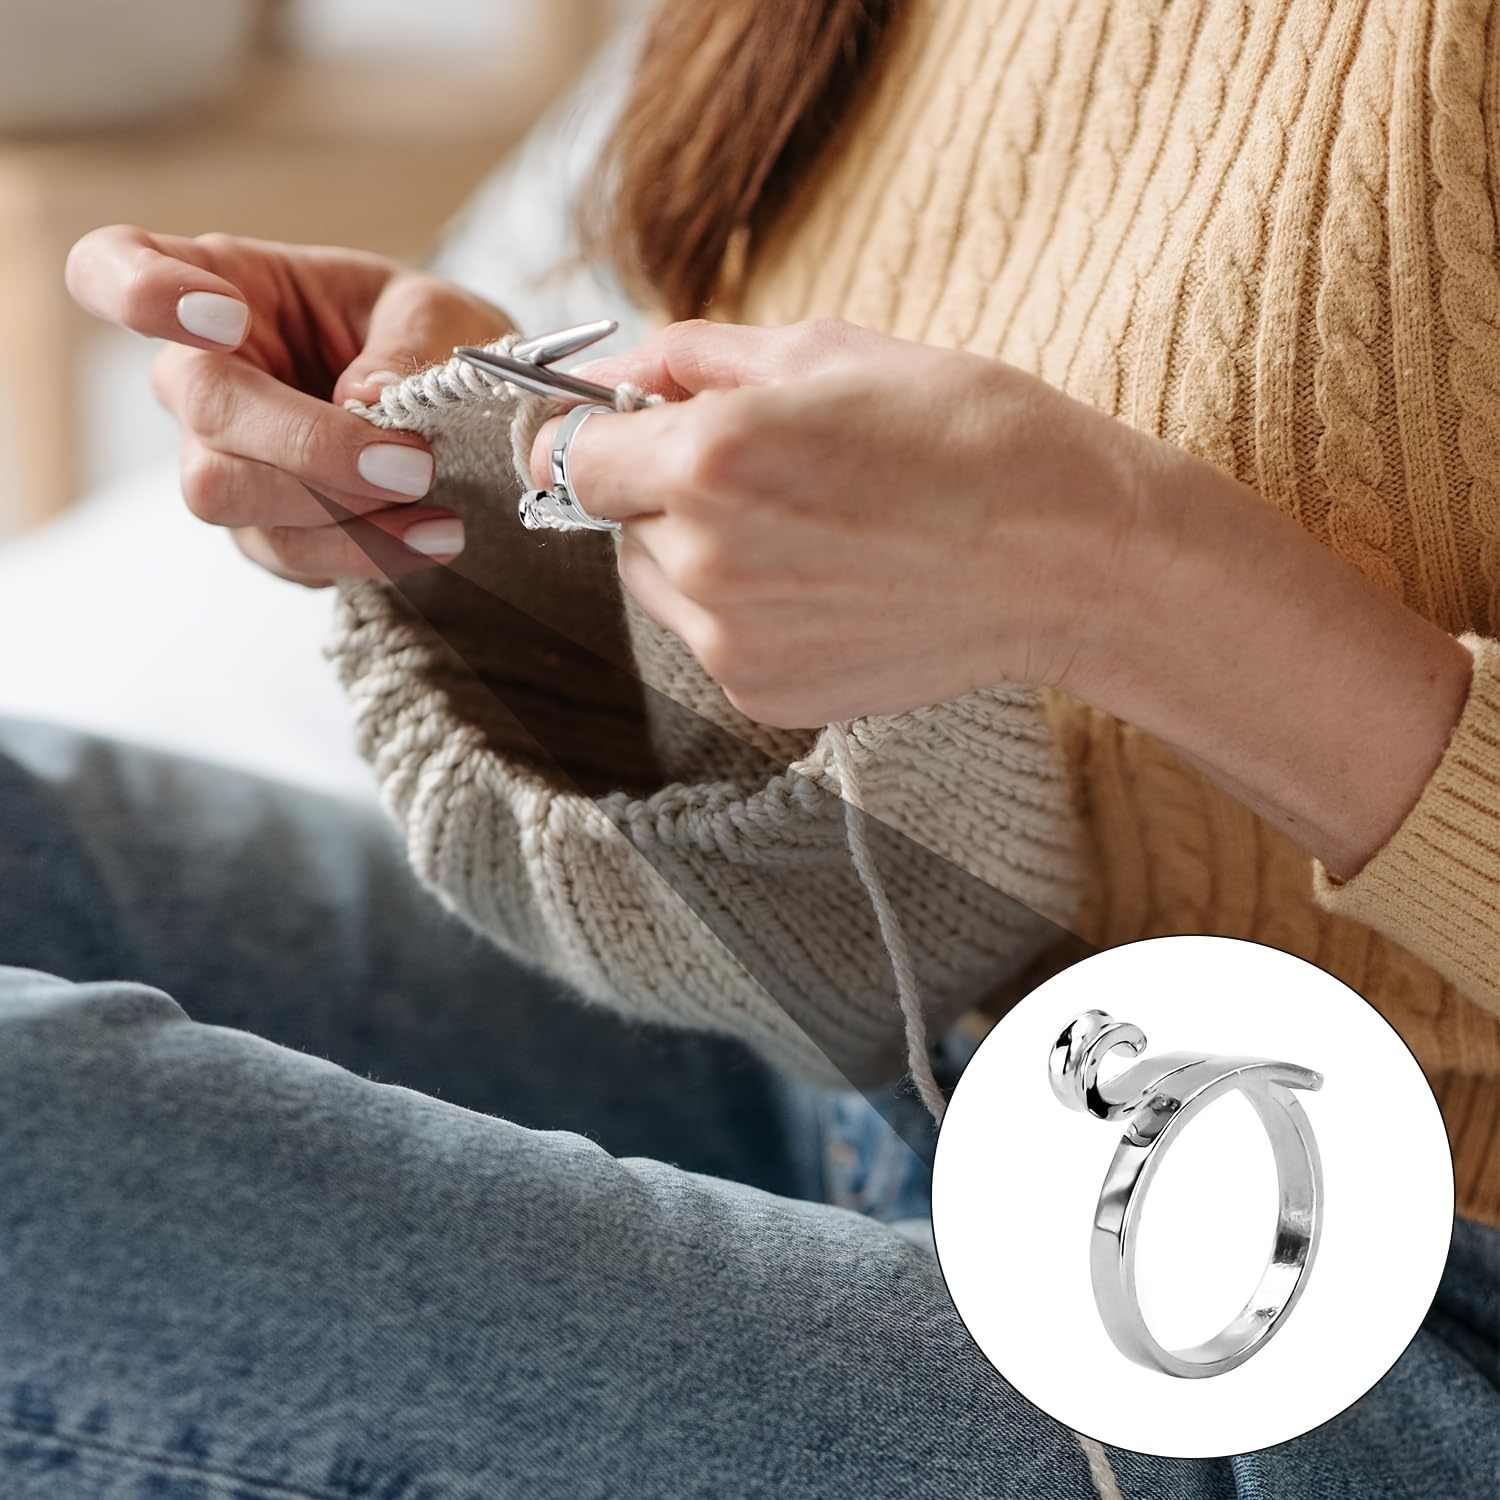  Knitting Ring for Finger Adjustable Crochet Ring Knitting Loop  Ring for Faster Knitting Crochet Accessories (1-Gold)